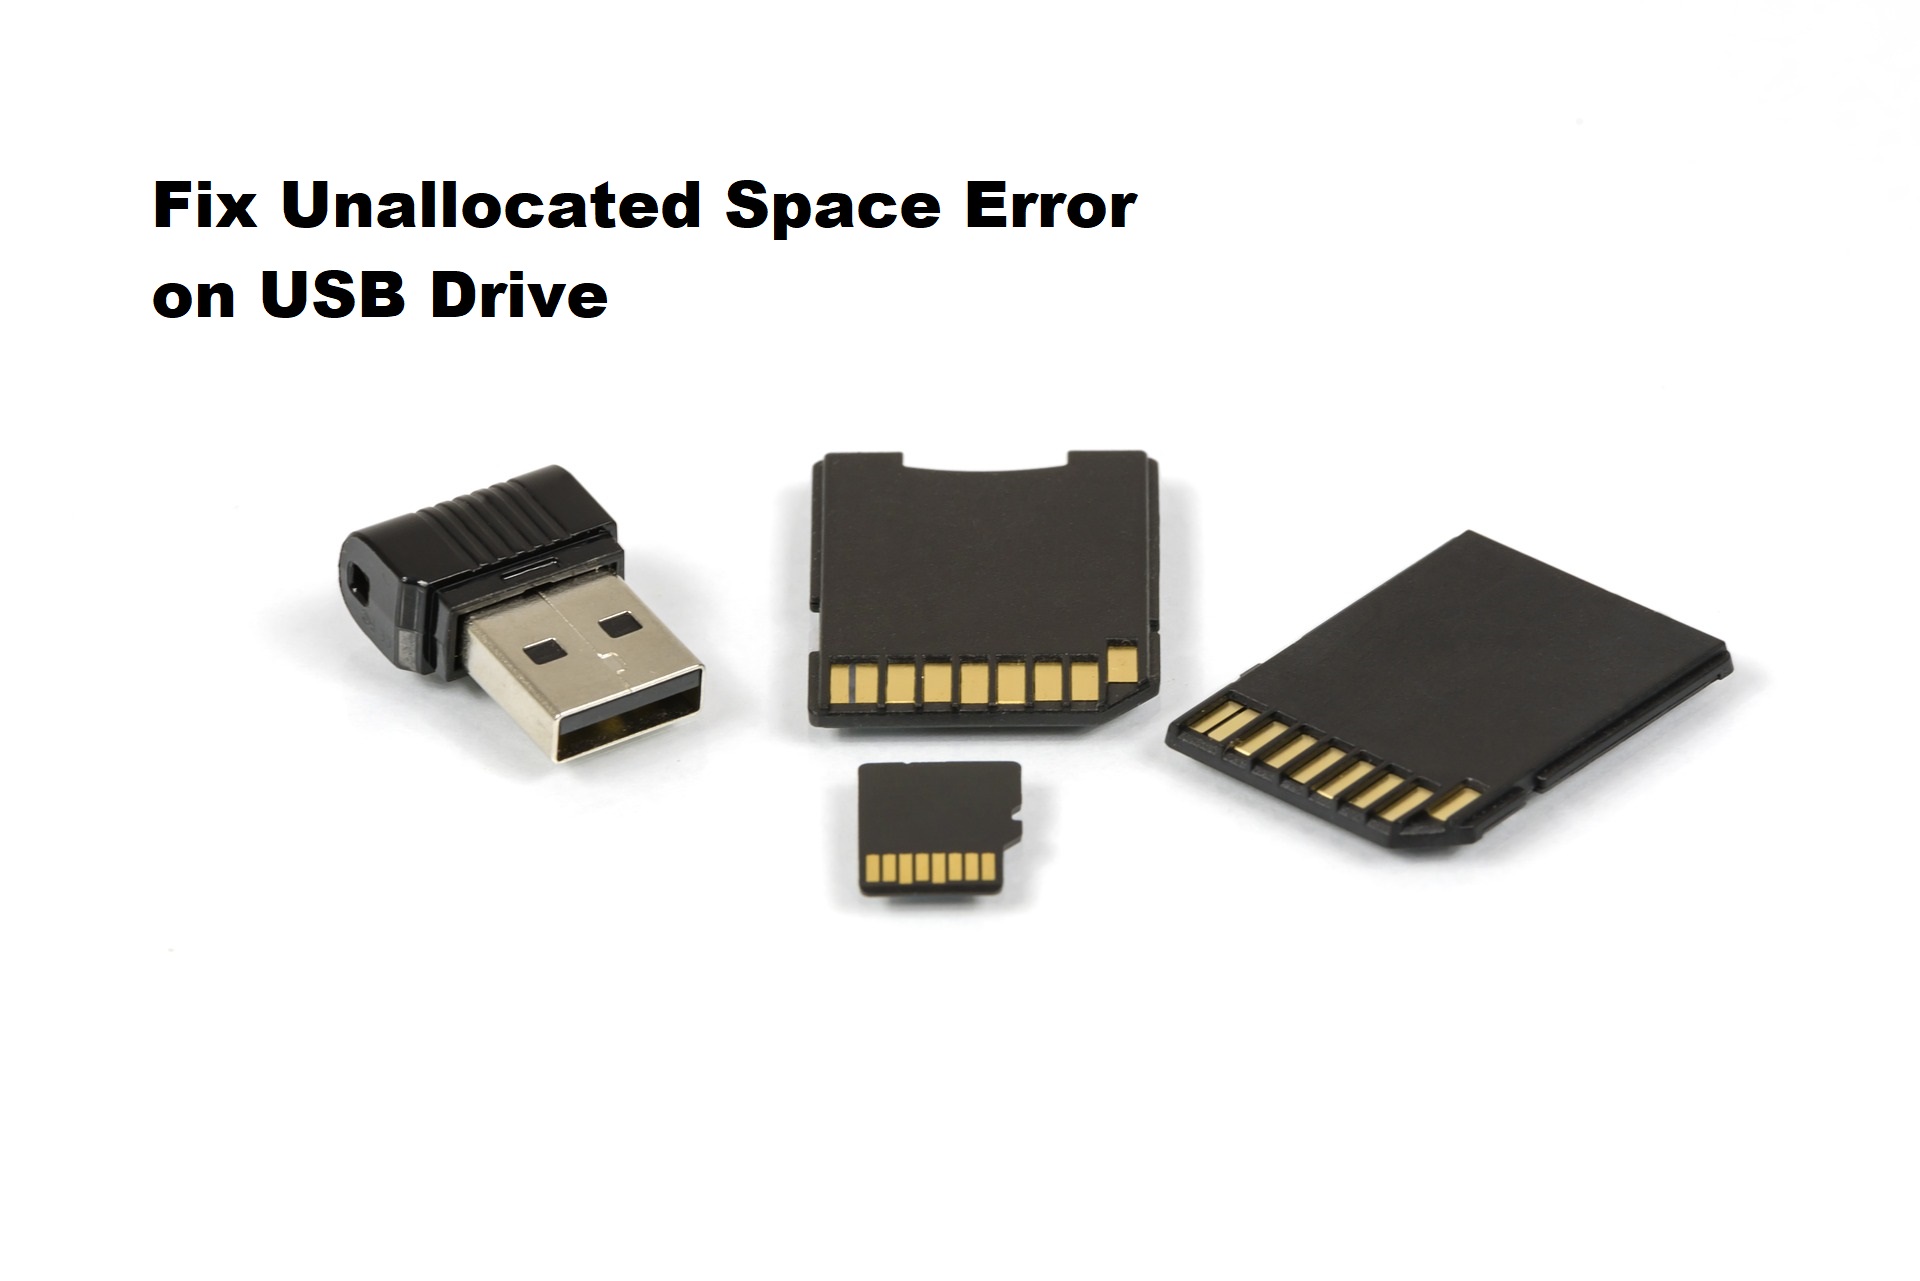 Unallocated space error on USB drive